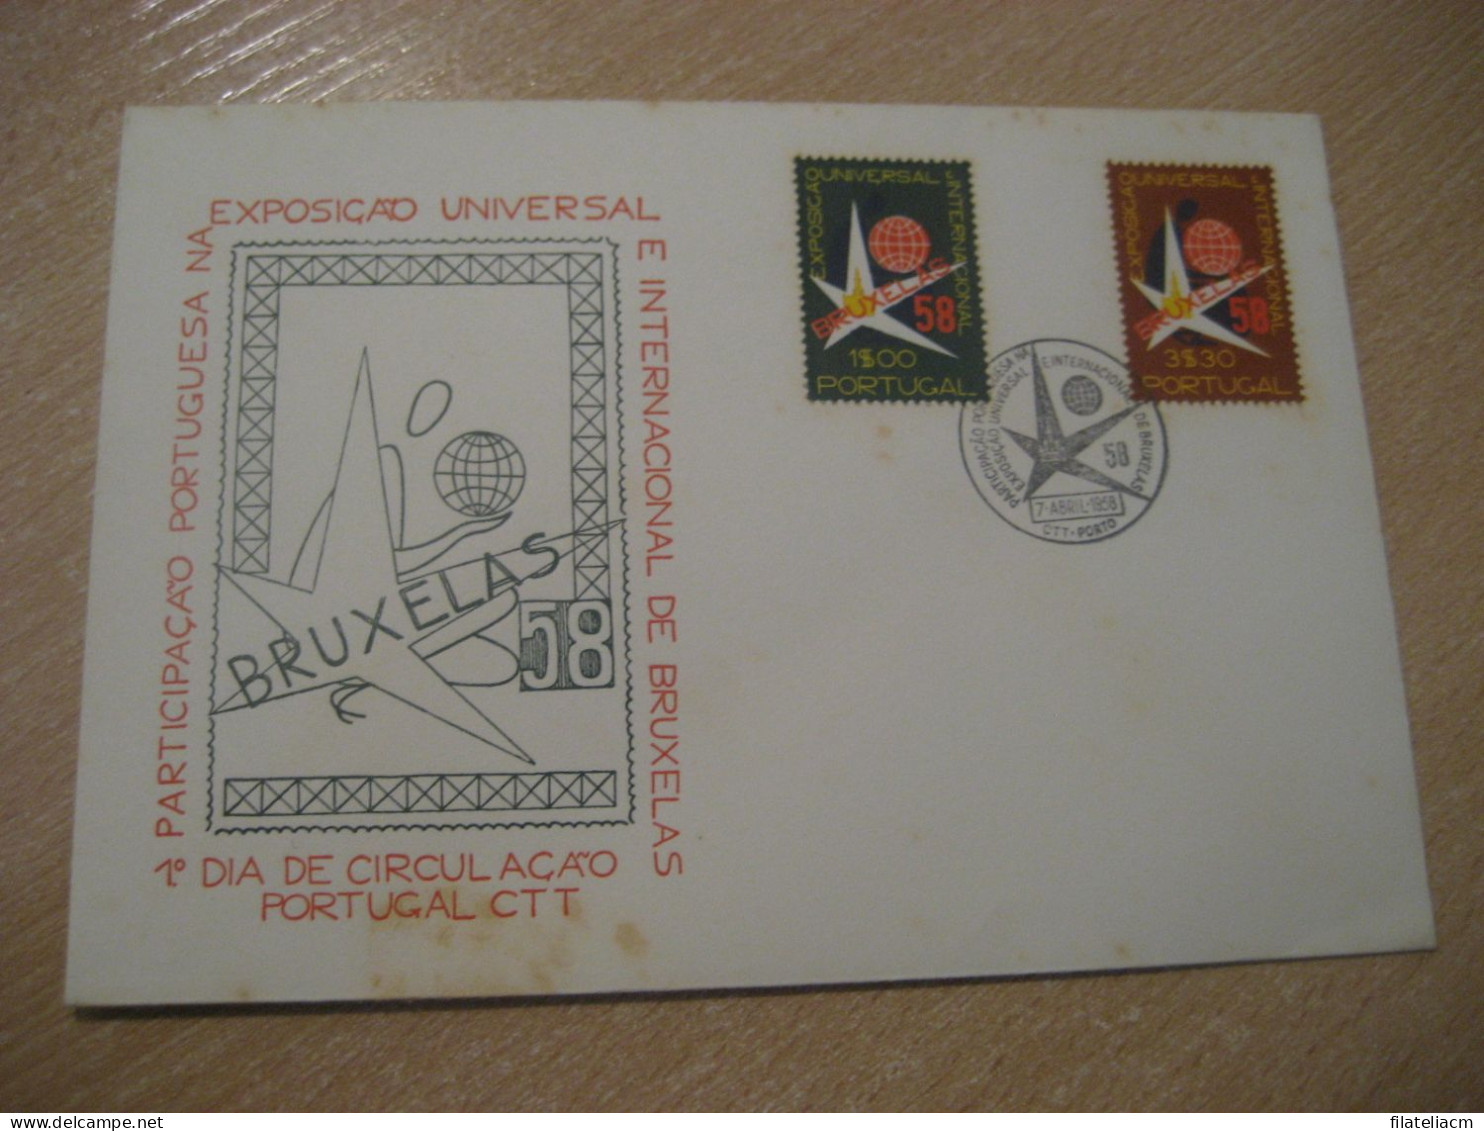 PORTO 1958 Bruxelles Belgium FDC Cancel Cover PORTUGAL - Covers & Documents